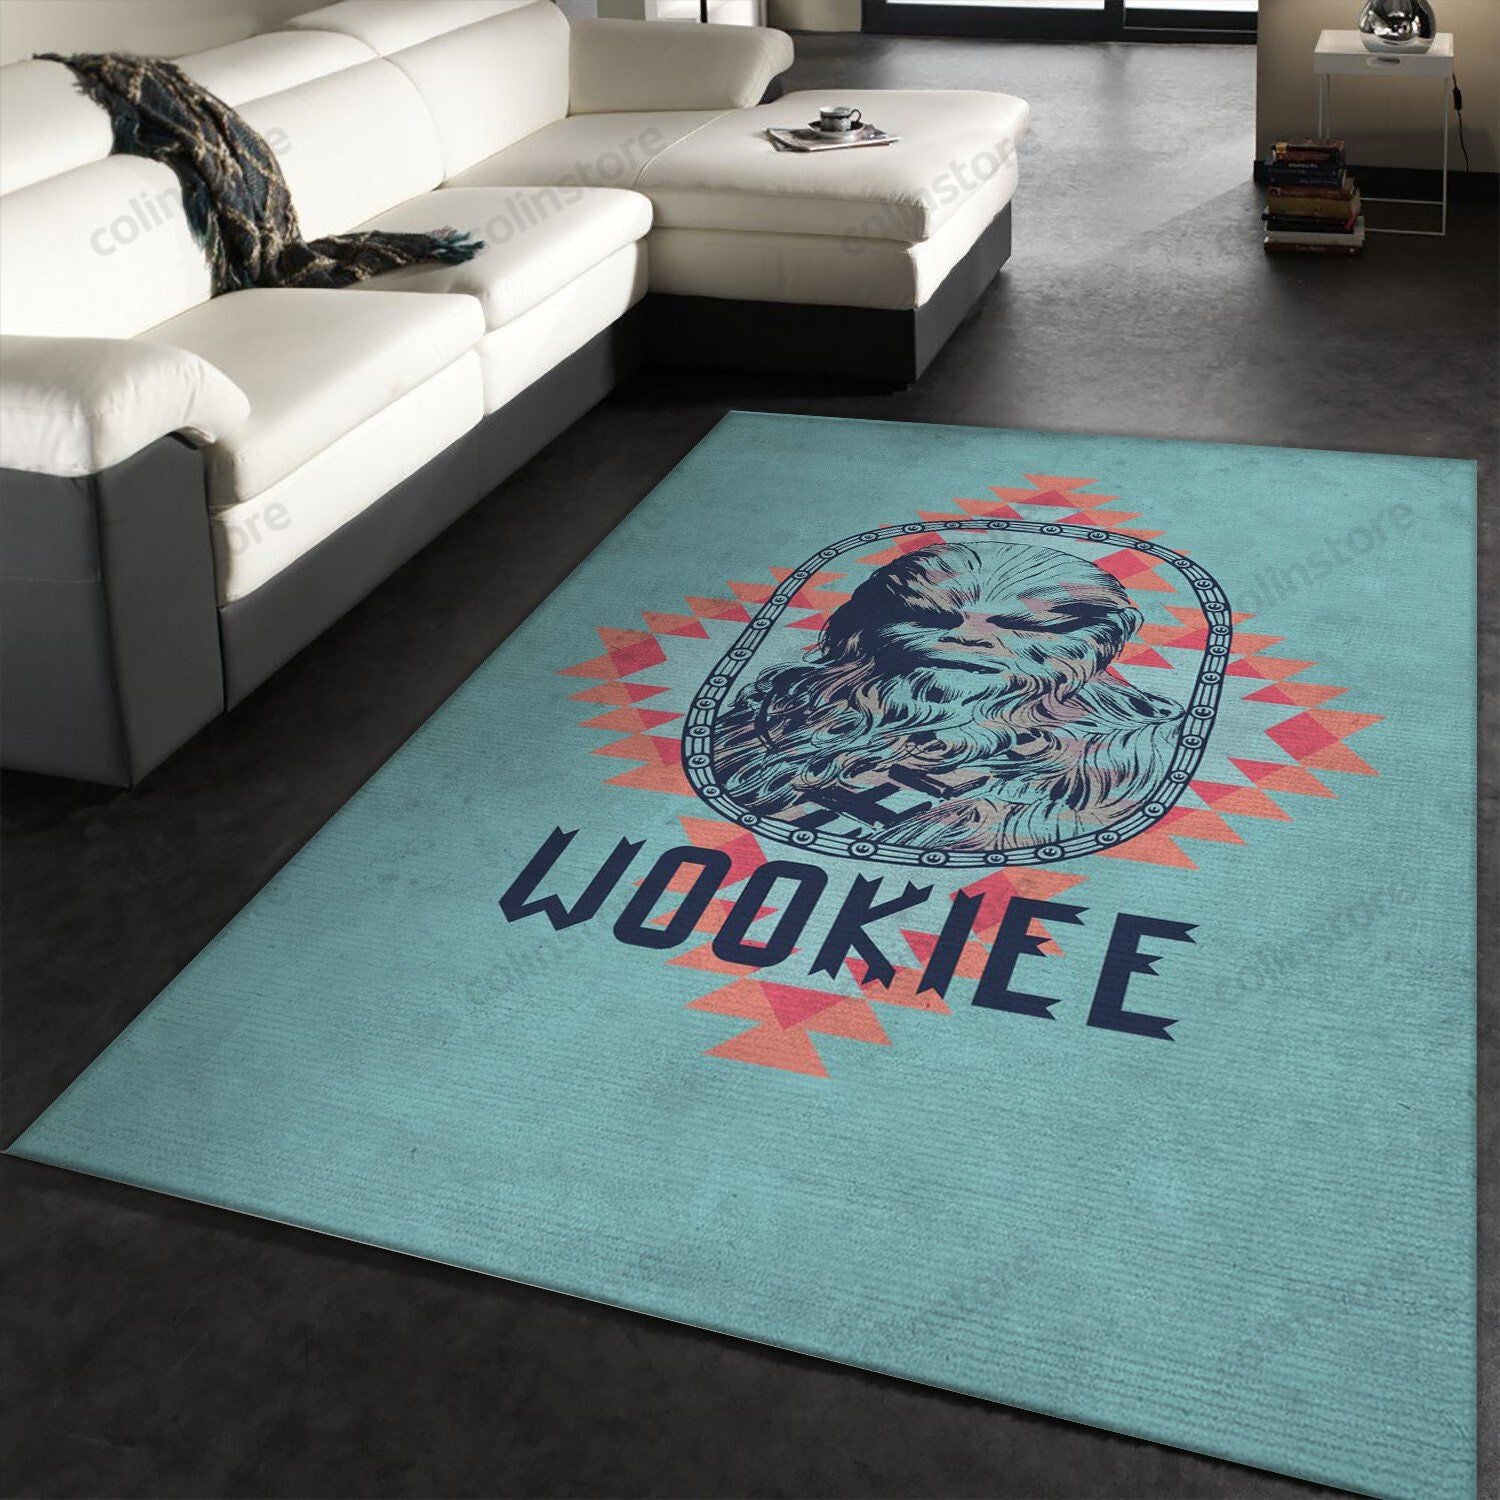 Wookiee Star Wars Movie Area Area Rug Carpet